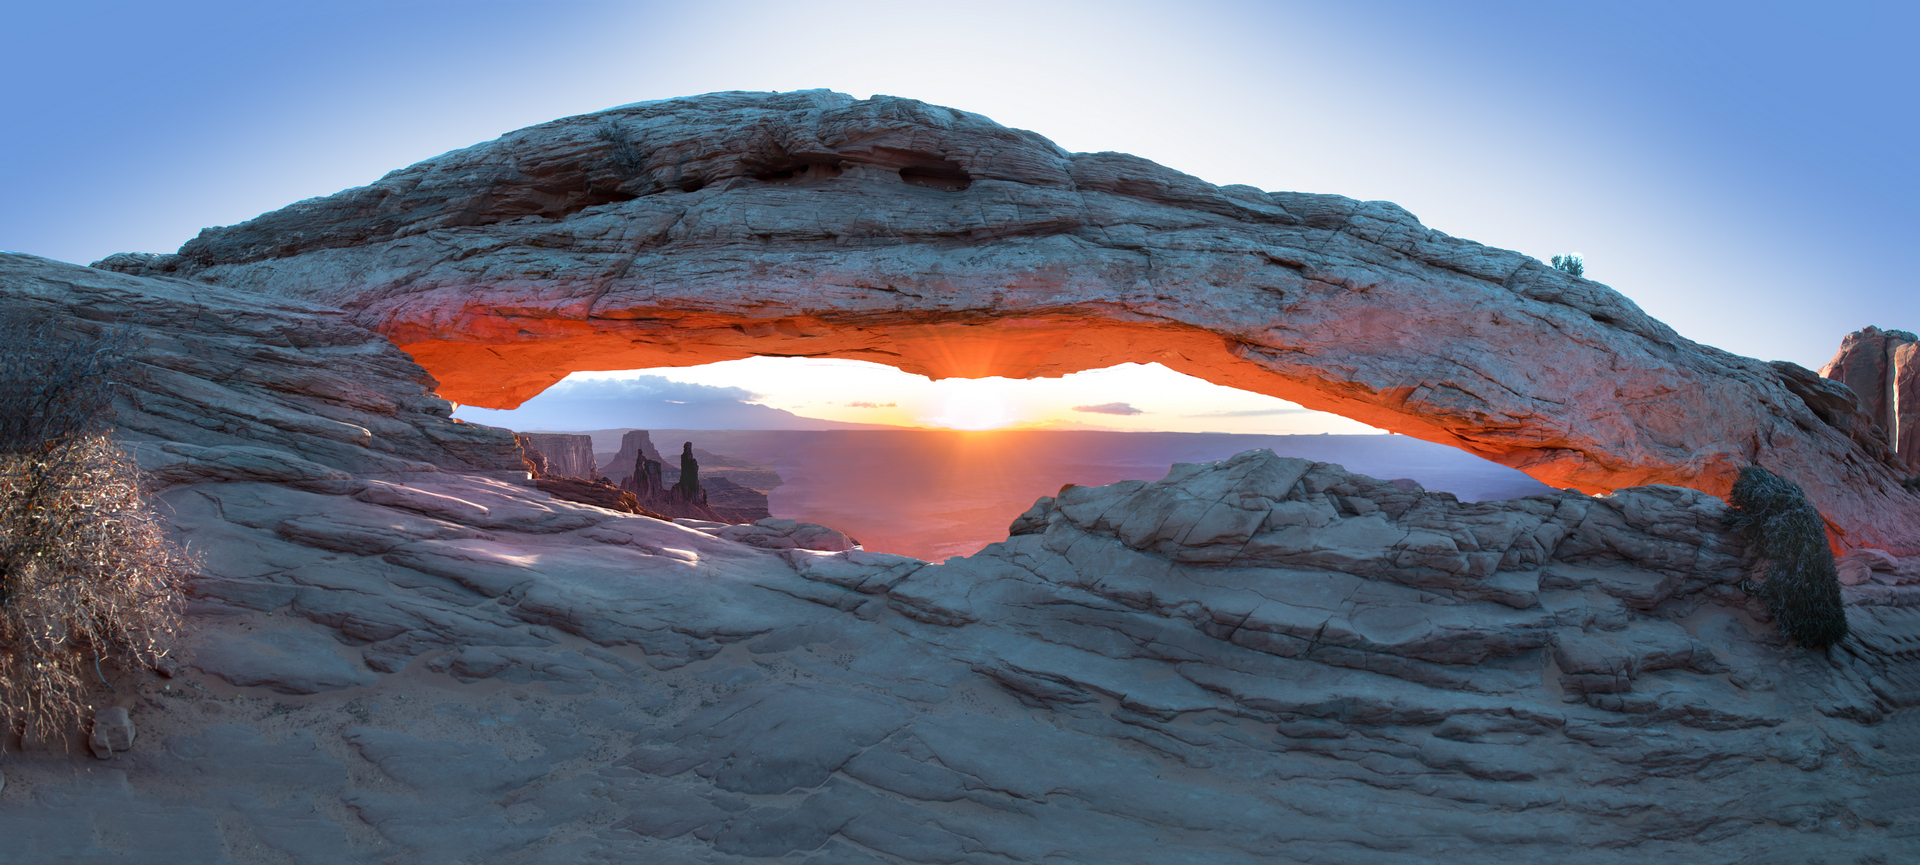 Mesa  Arch  Panorama 반사빛 DSC_8757a 아껴 1920 x 1280.jpg